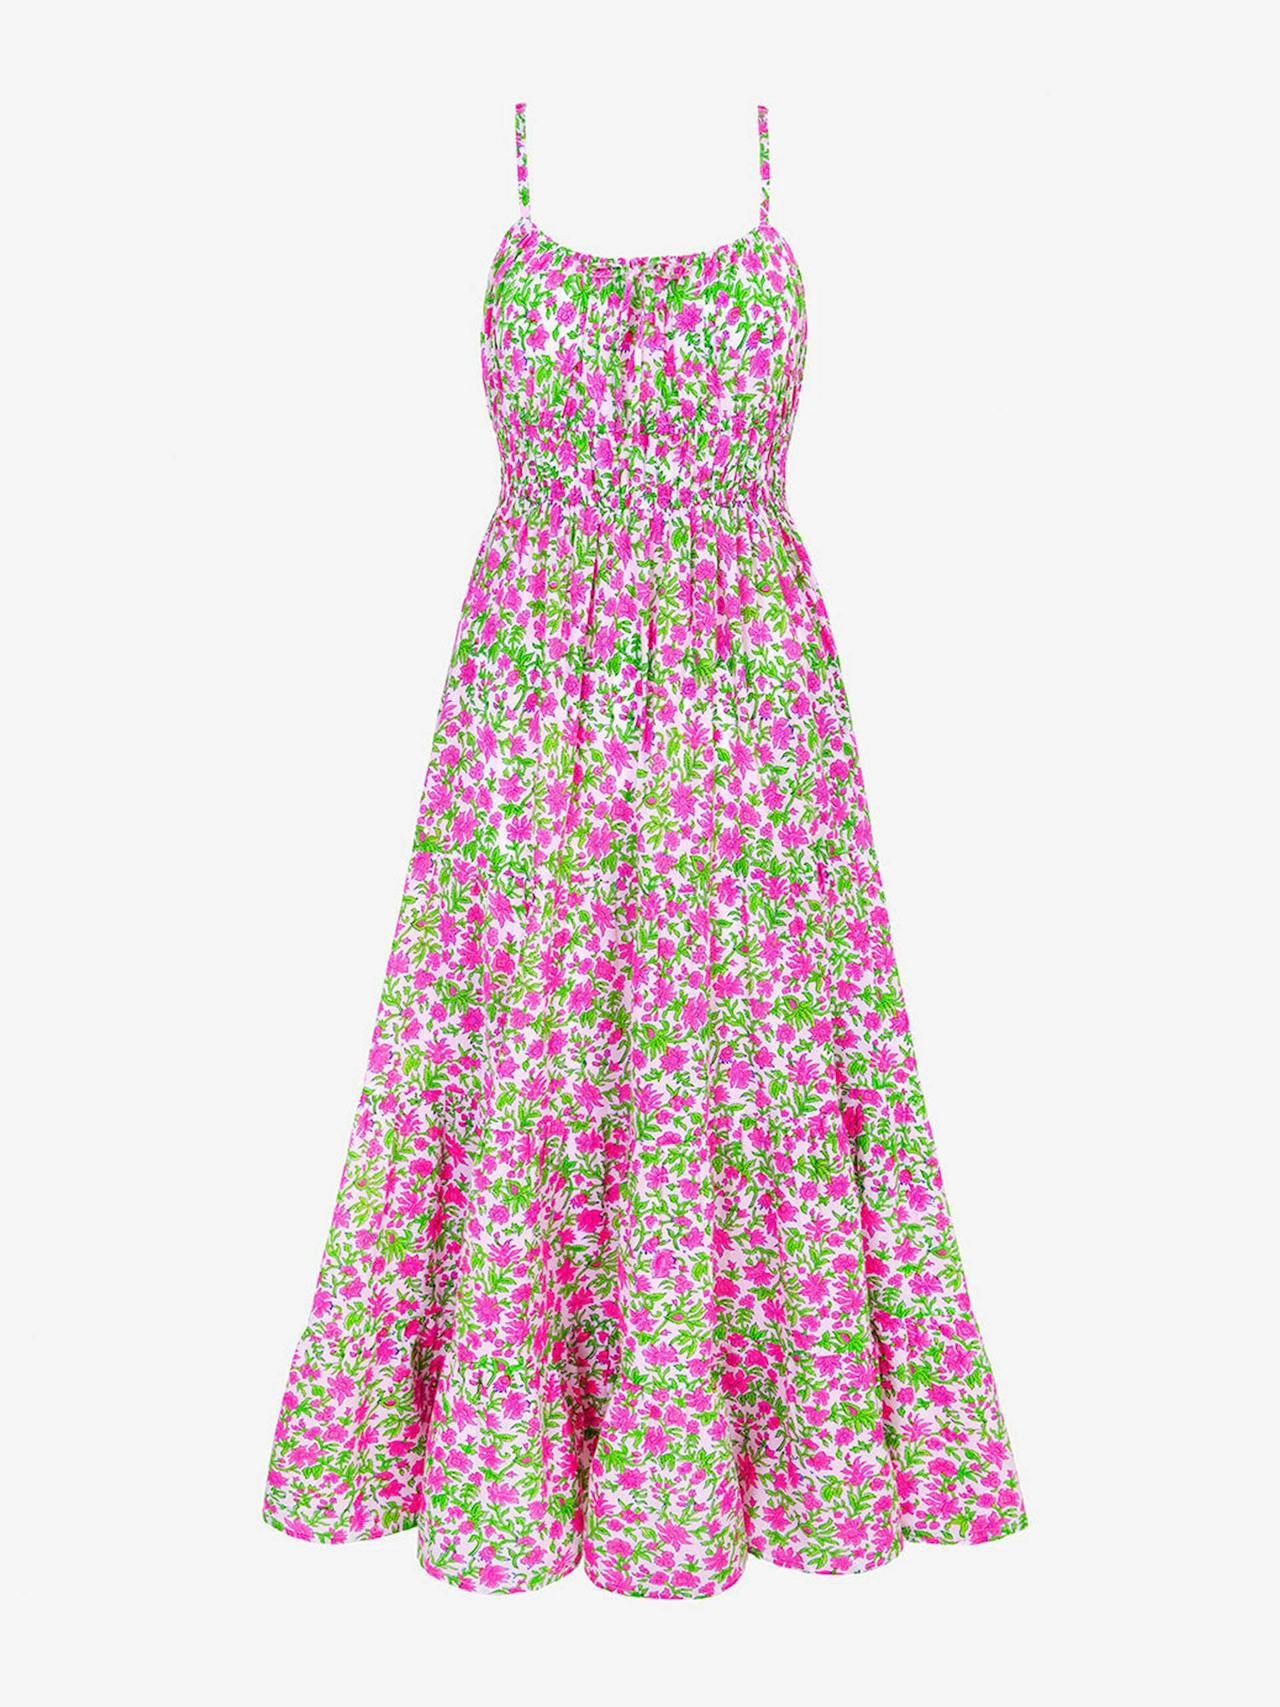 Neon Lolita Seychelles dress